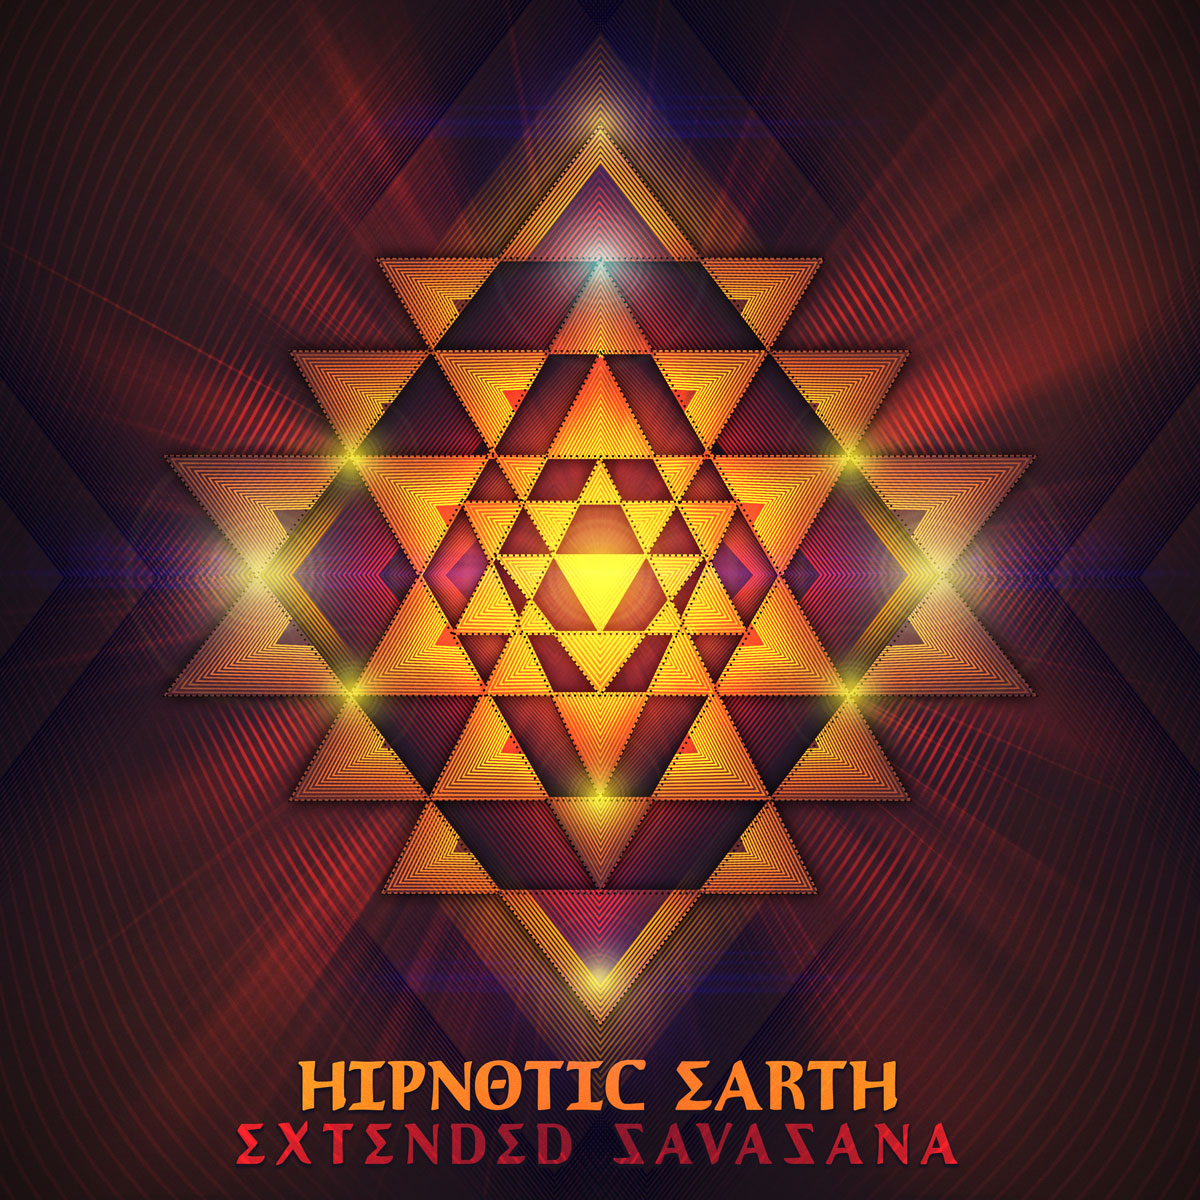 Hipnotic Earth